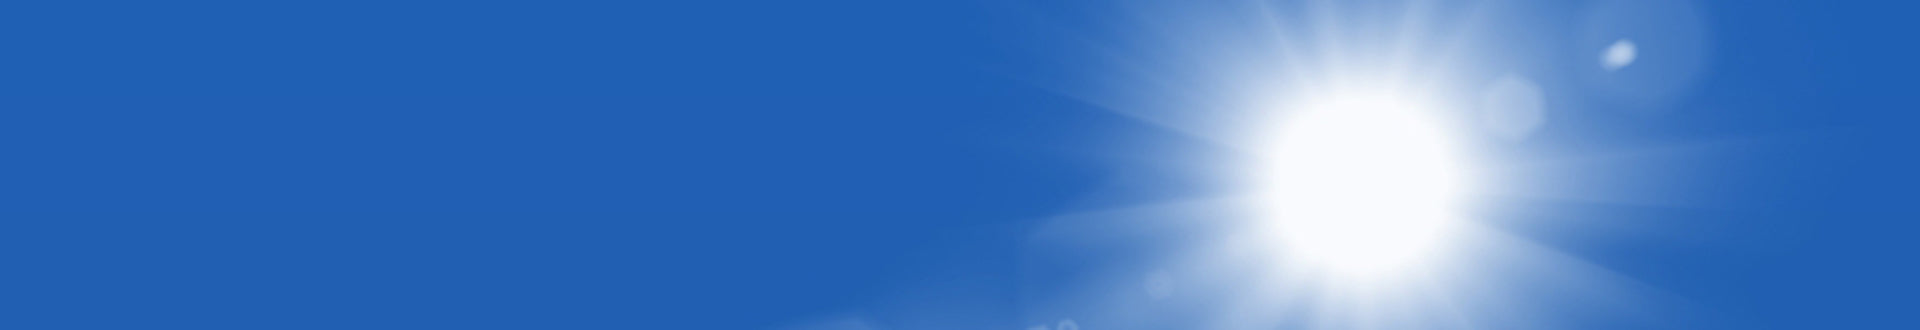 Sun in blue sky with Kinona's Sun Protection headline on it